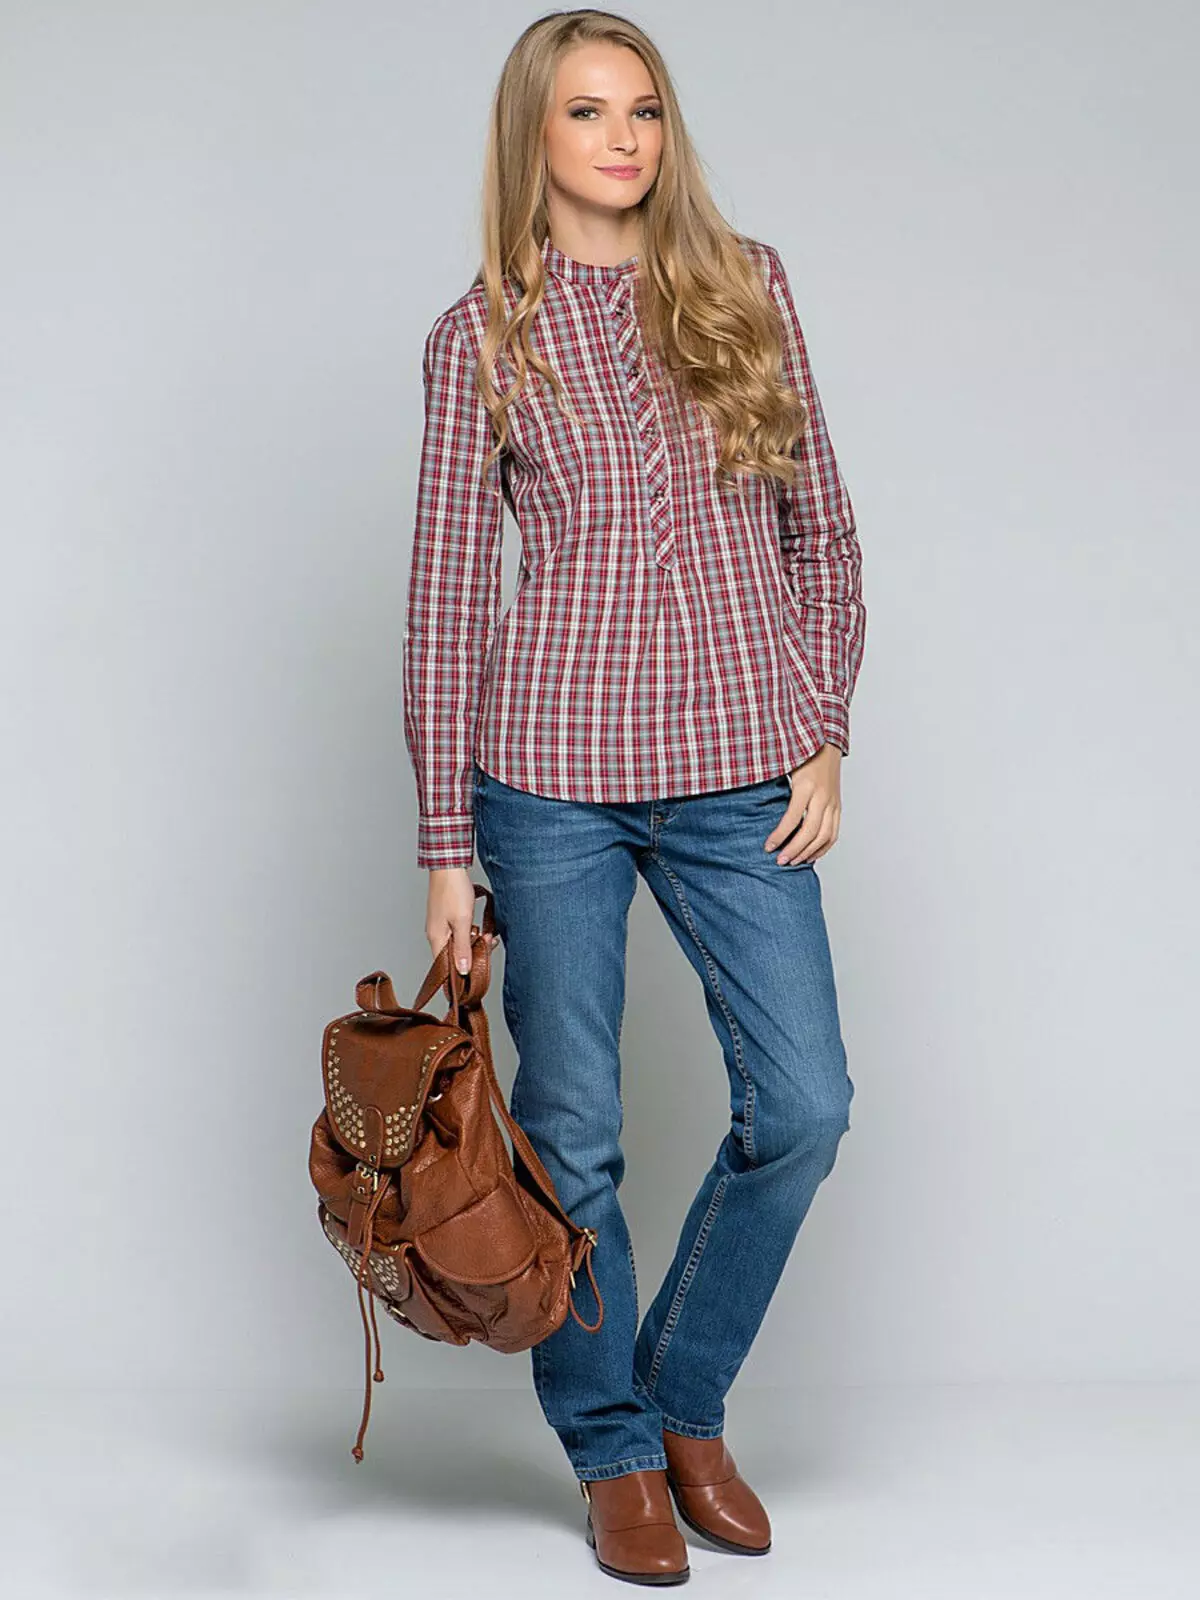 Li Cooper jeans (46 photos): female models Dimensional mesh, reviews 1093_17